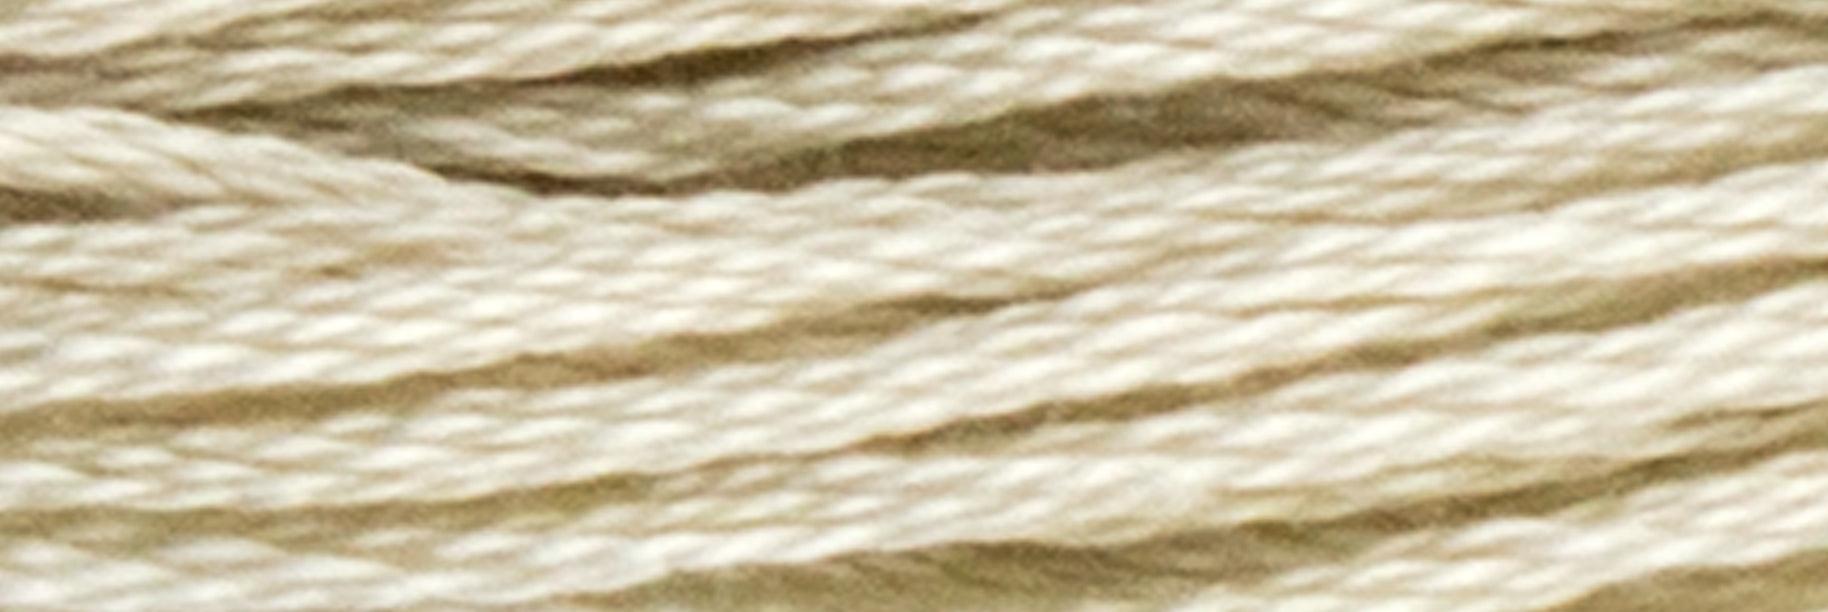 Stranded Cotton Luca-S - 459 / DMC 822 / Anchor 390,830 Stranded Cotton - HobbyJobby